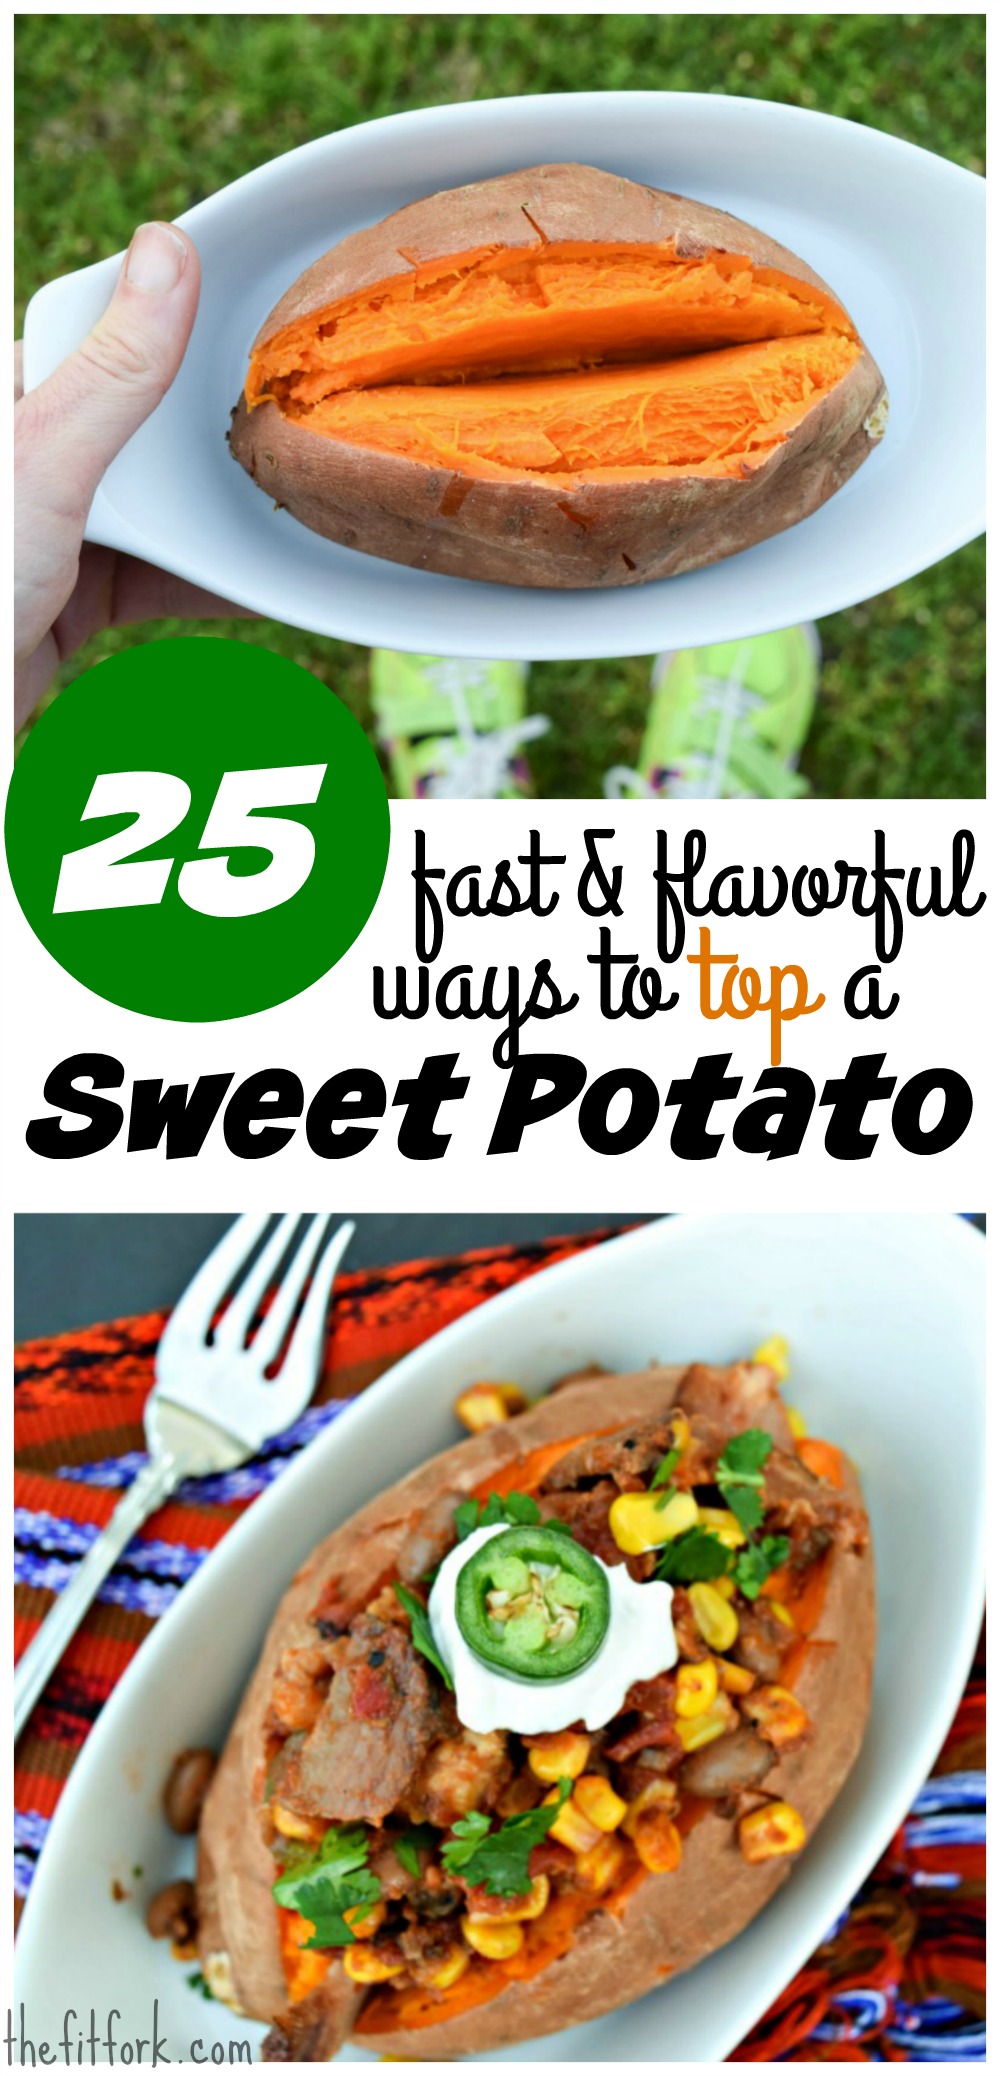 25 Tasty Ways to Top a Sweet Potato – Quick Ideas! | thefitfork.com